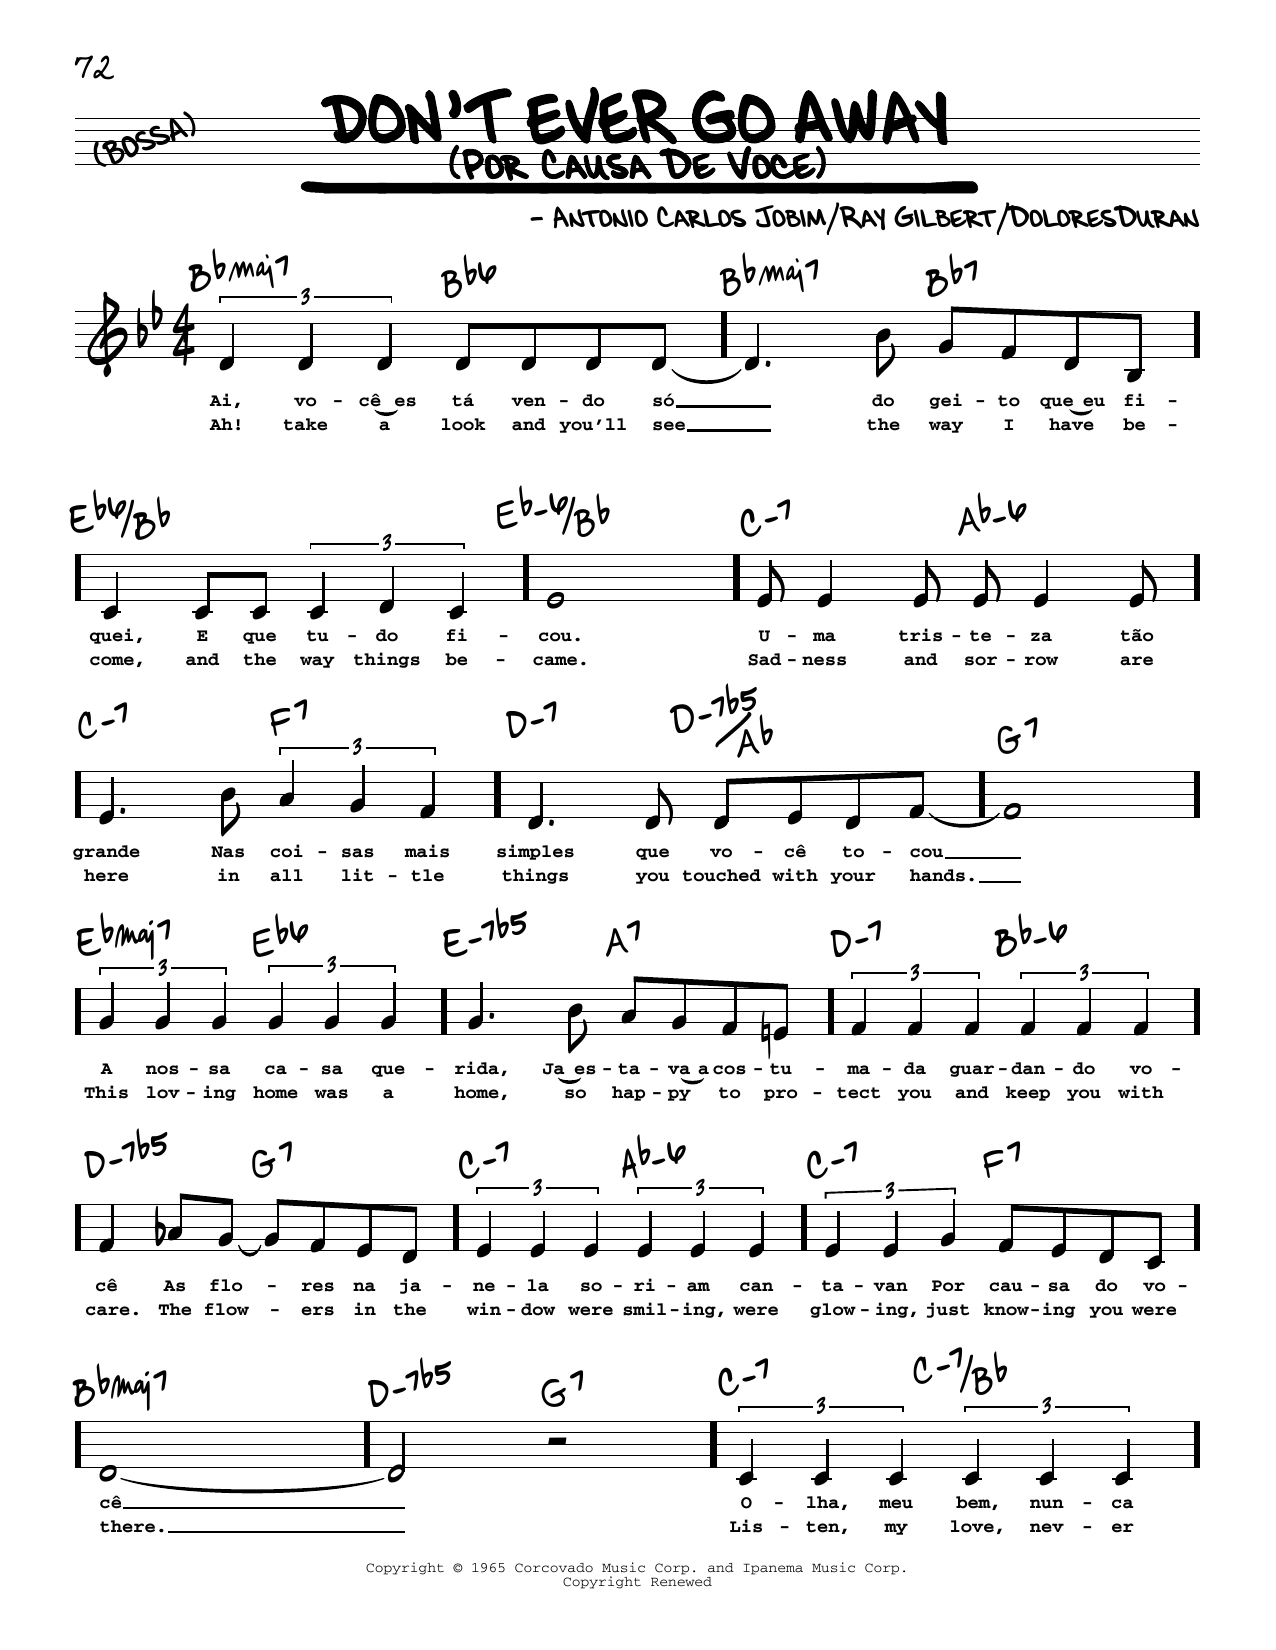 Antonio Carlos Jobim Don't Ever Go Away (Por Causa De Voce) (Low Voice) sheet music notes printable PDF score